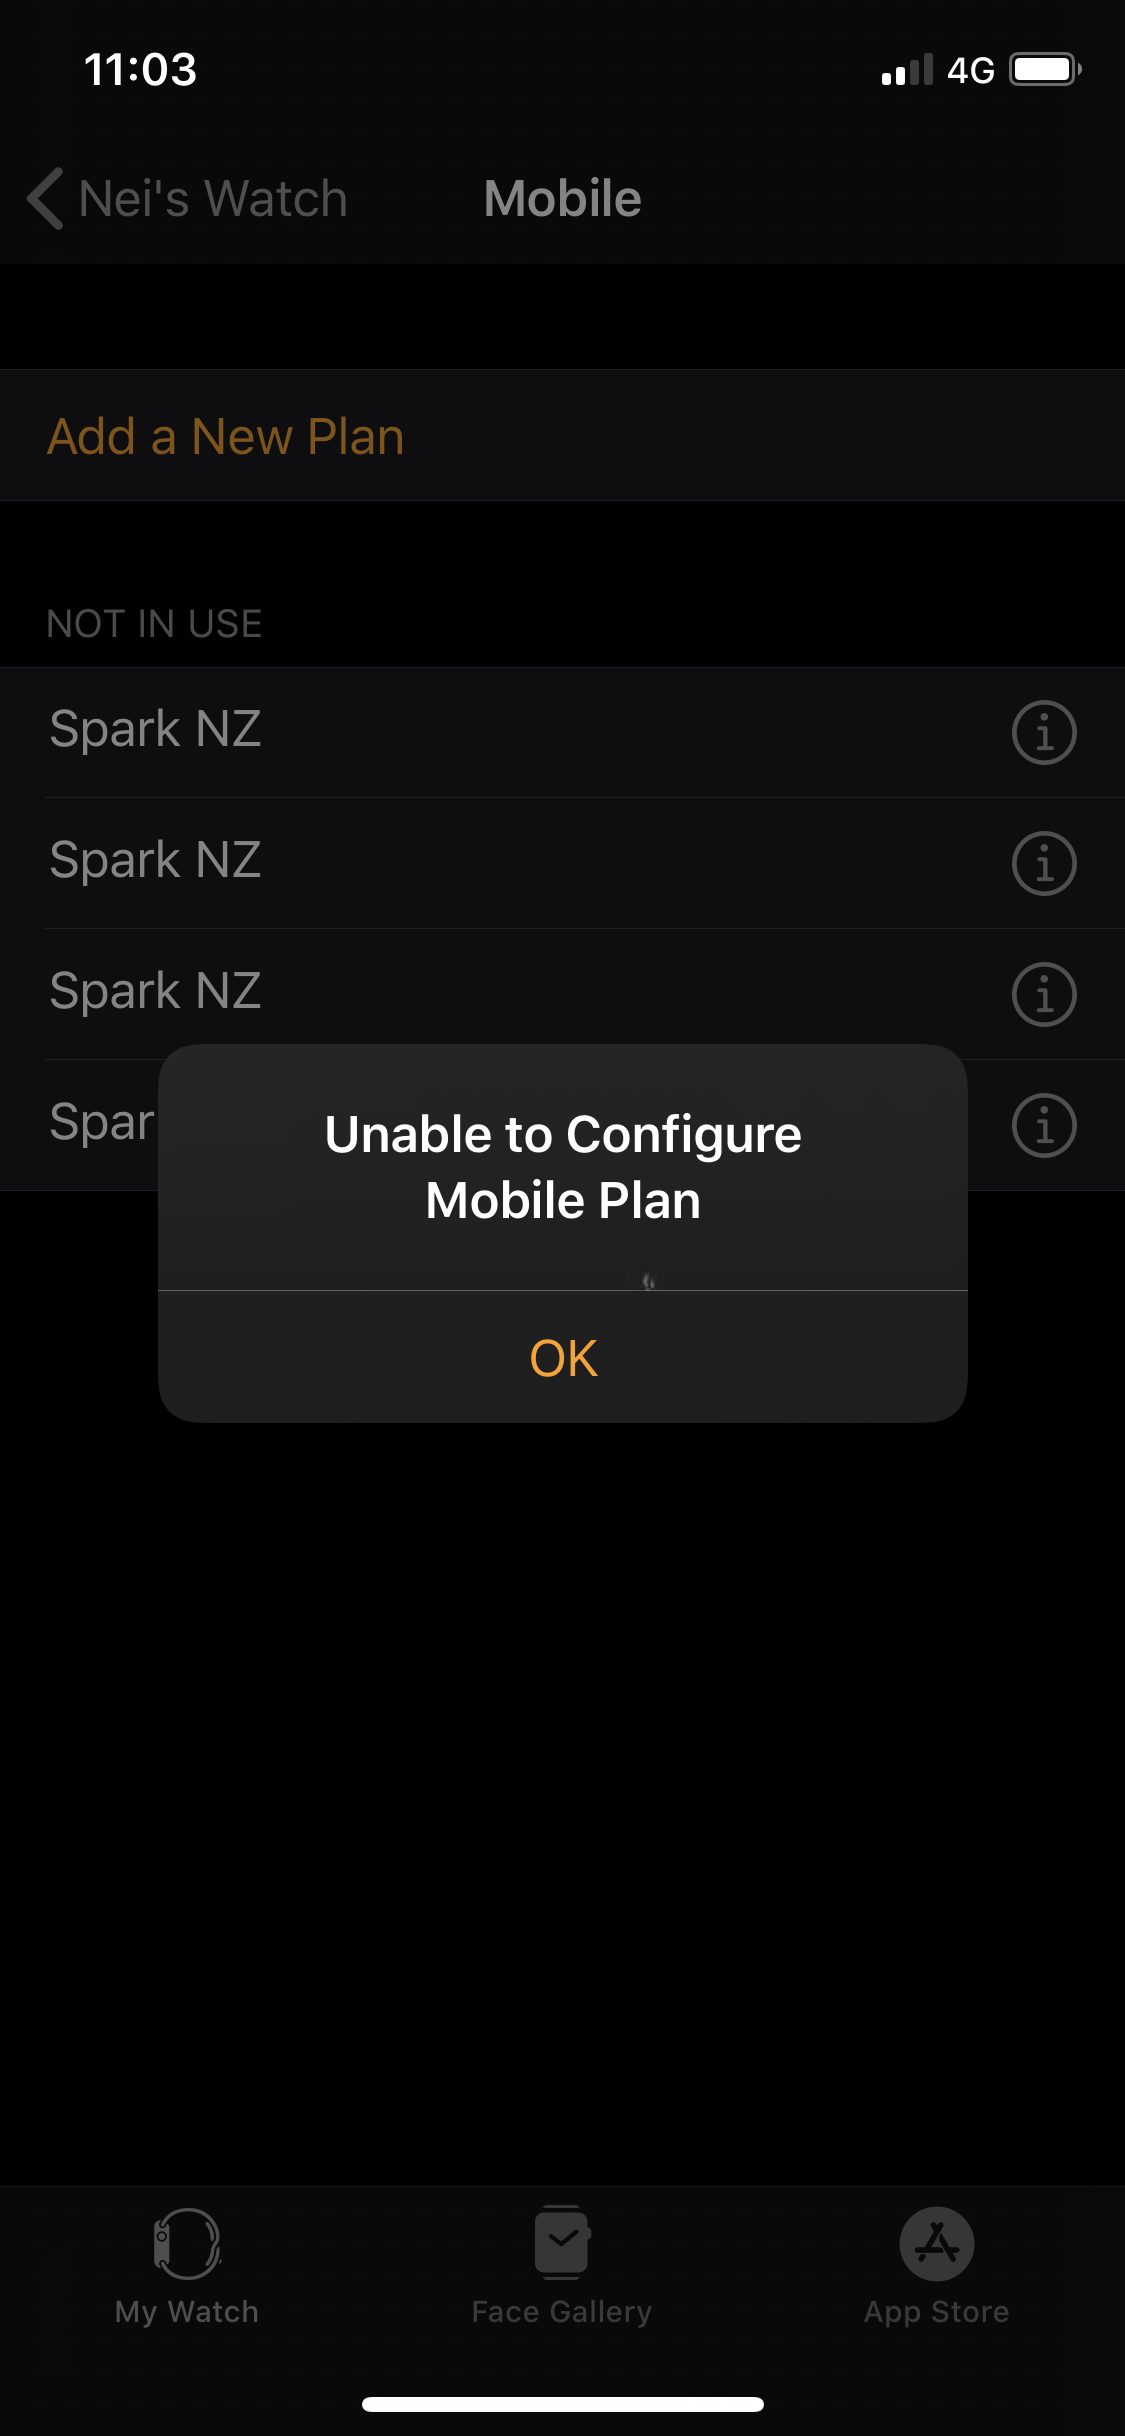 Unable to Configure Mobile Plan error message